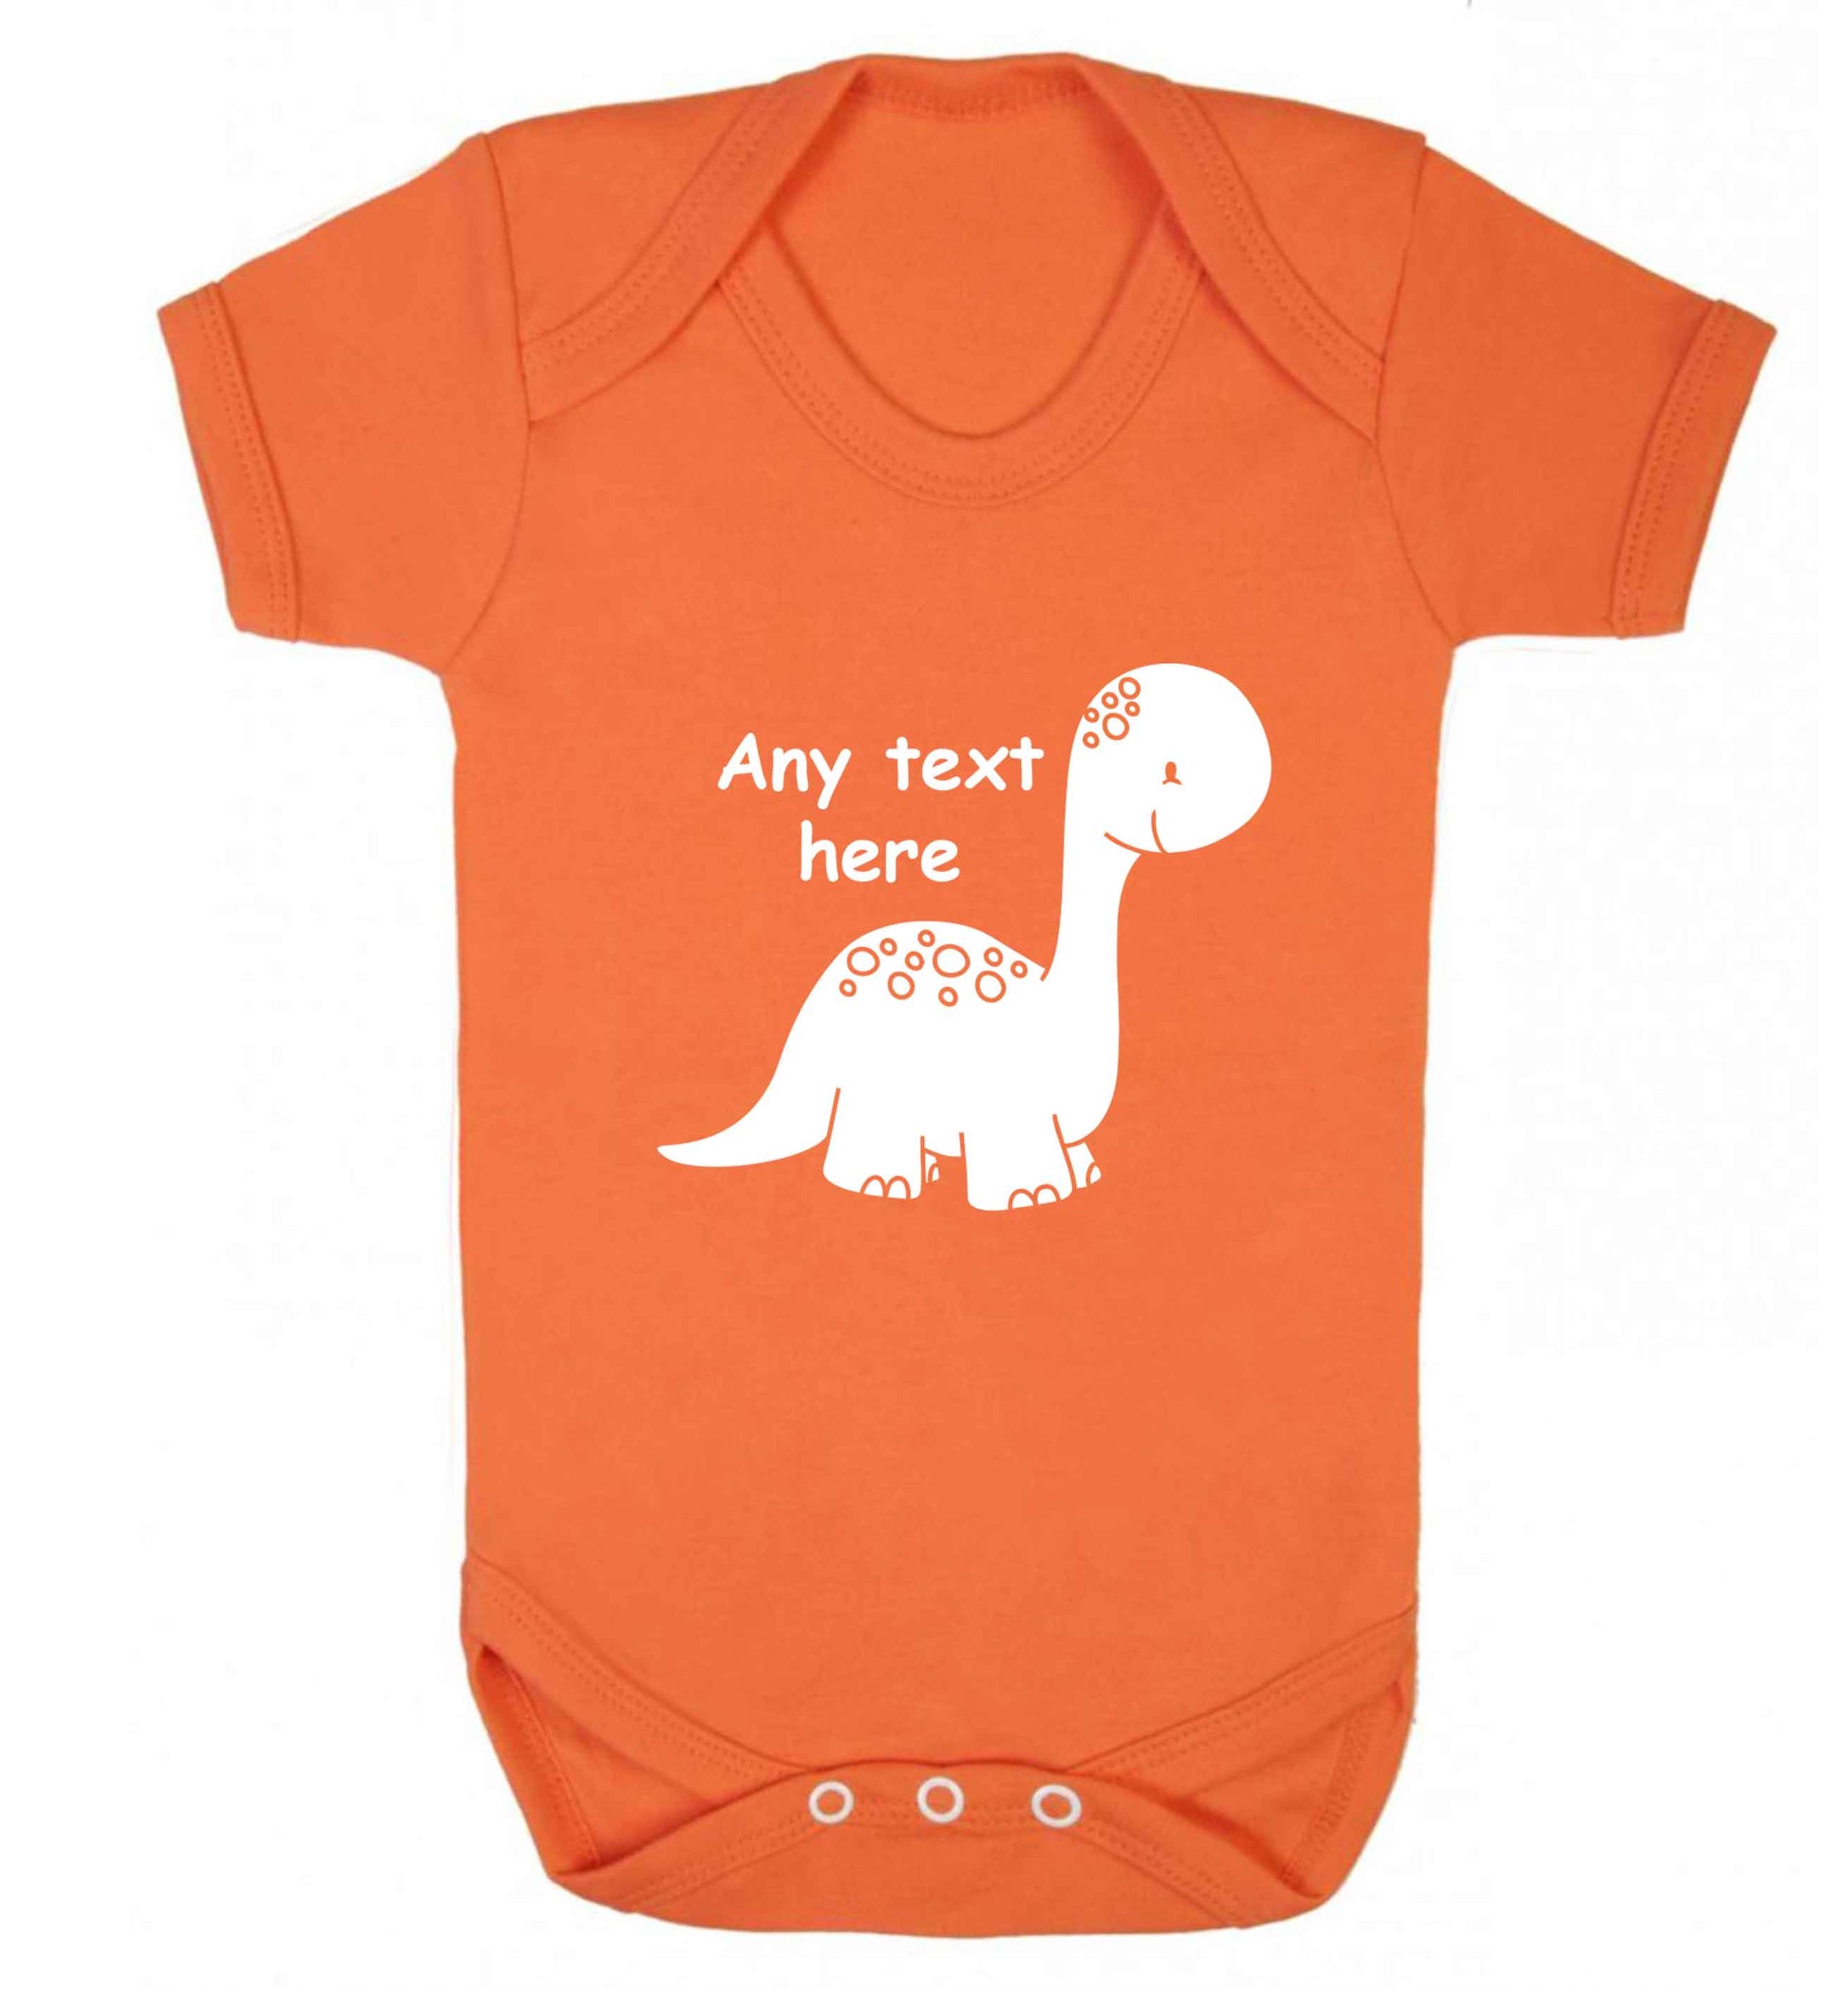 Dinosaur any text baby vest orange 18-24 months